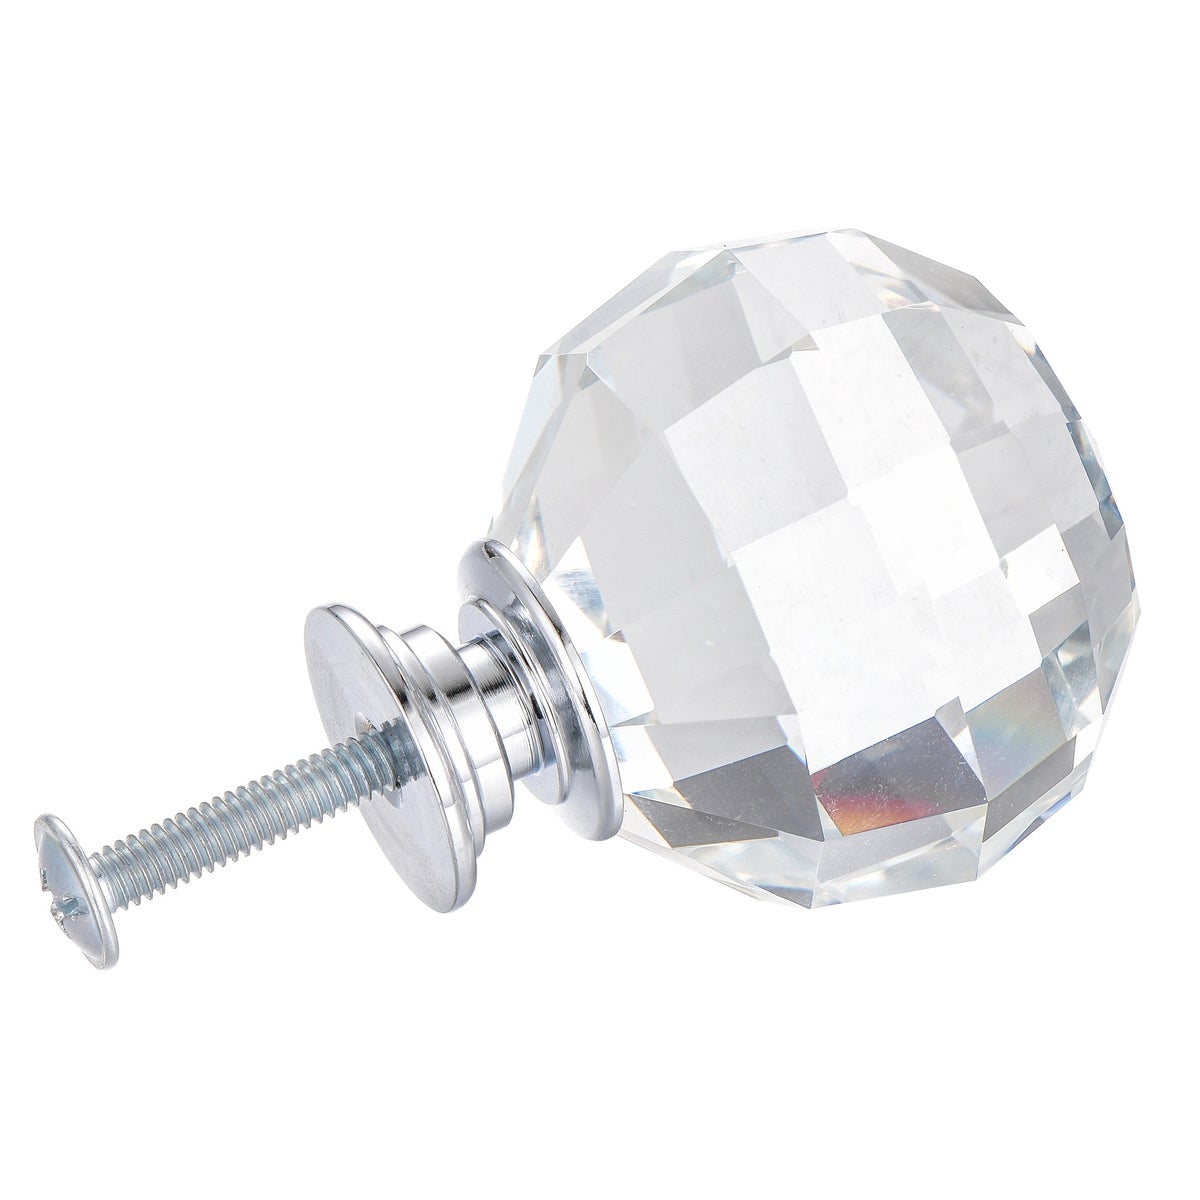 4PC - 40MM Classic Crystal Glass Knob Pull Handles (12 Set)